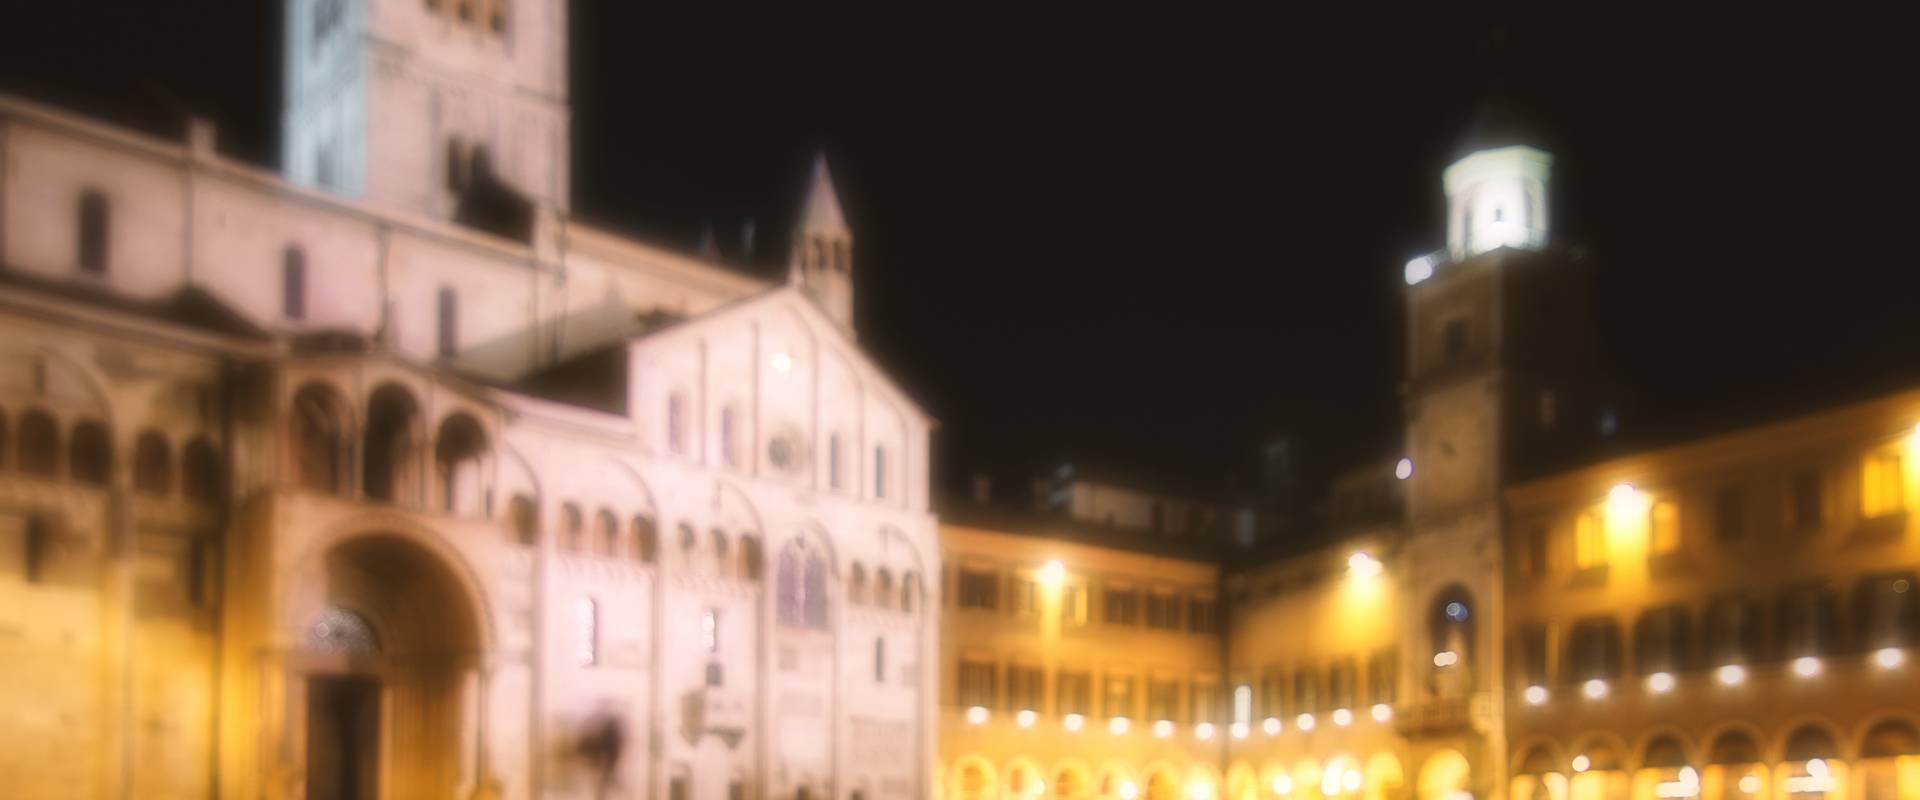 Torre Ghirlandina Modena di notte photo by Lara zanarini